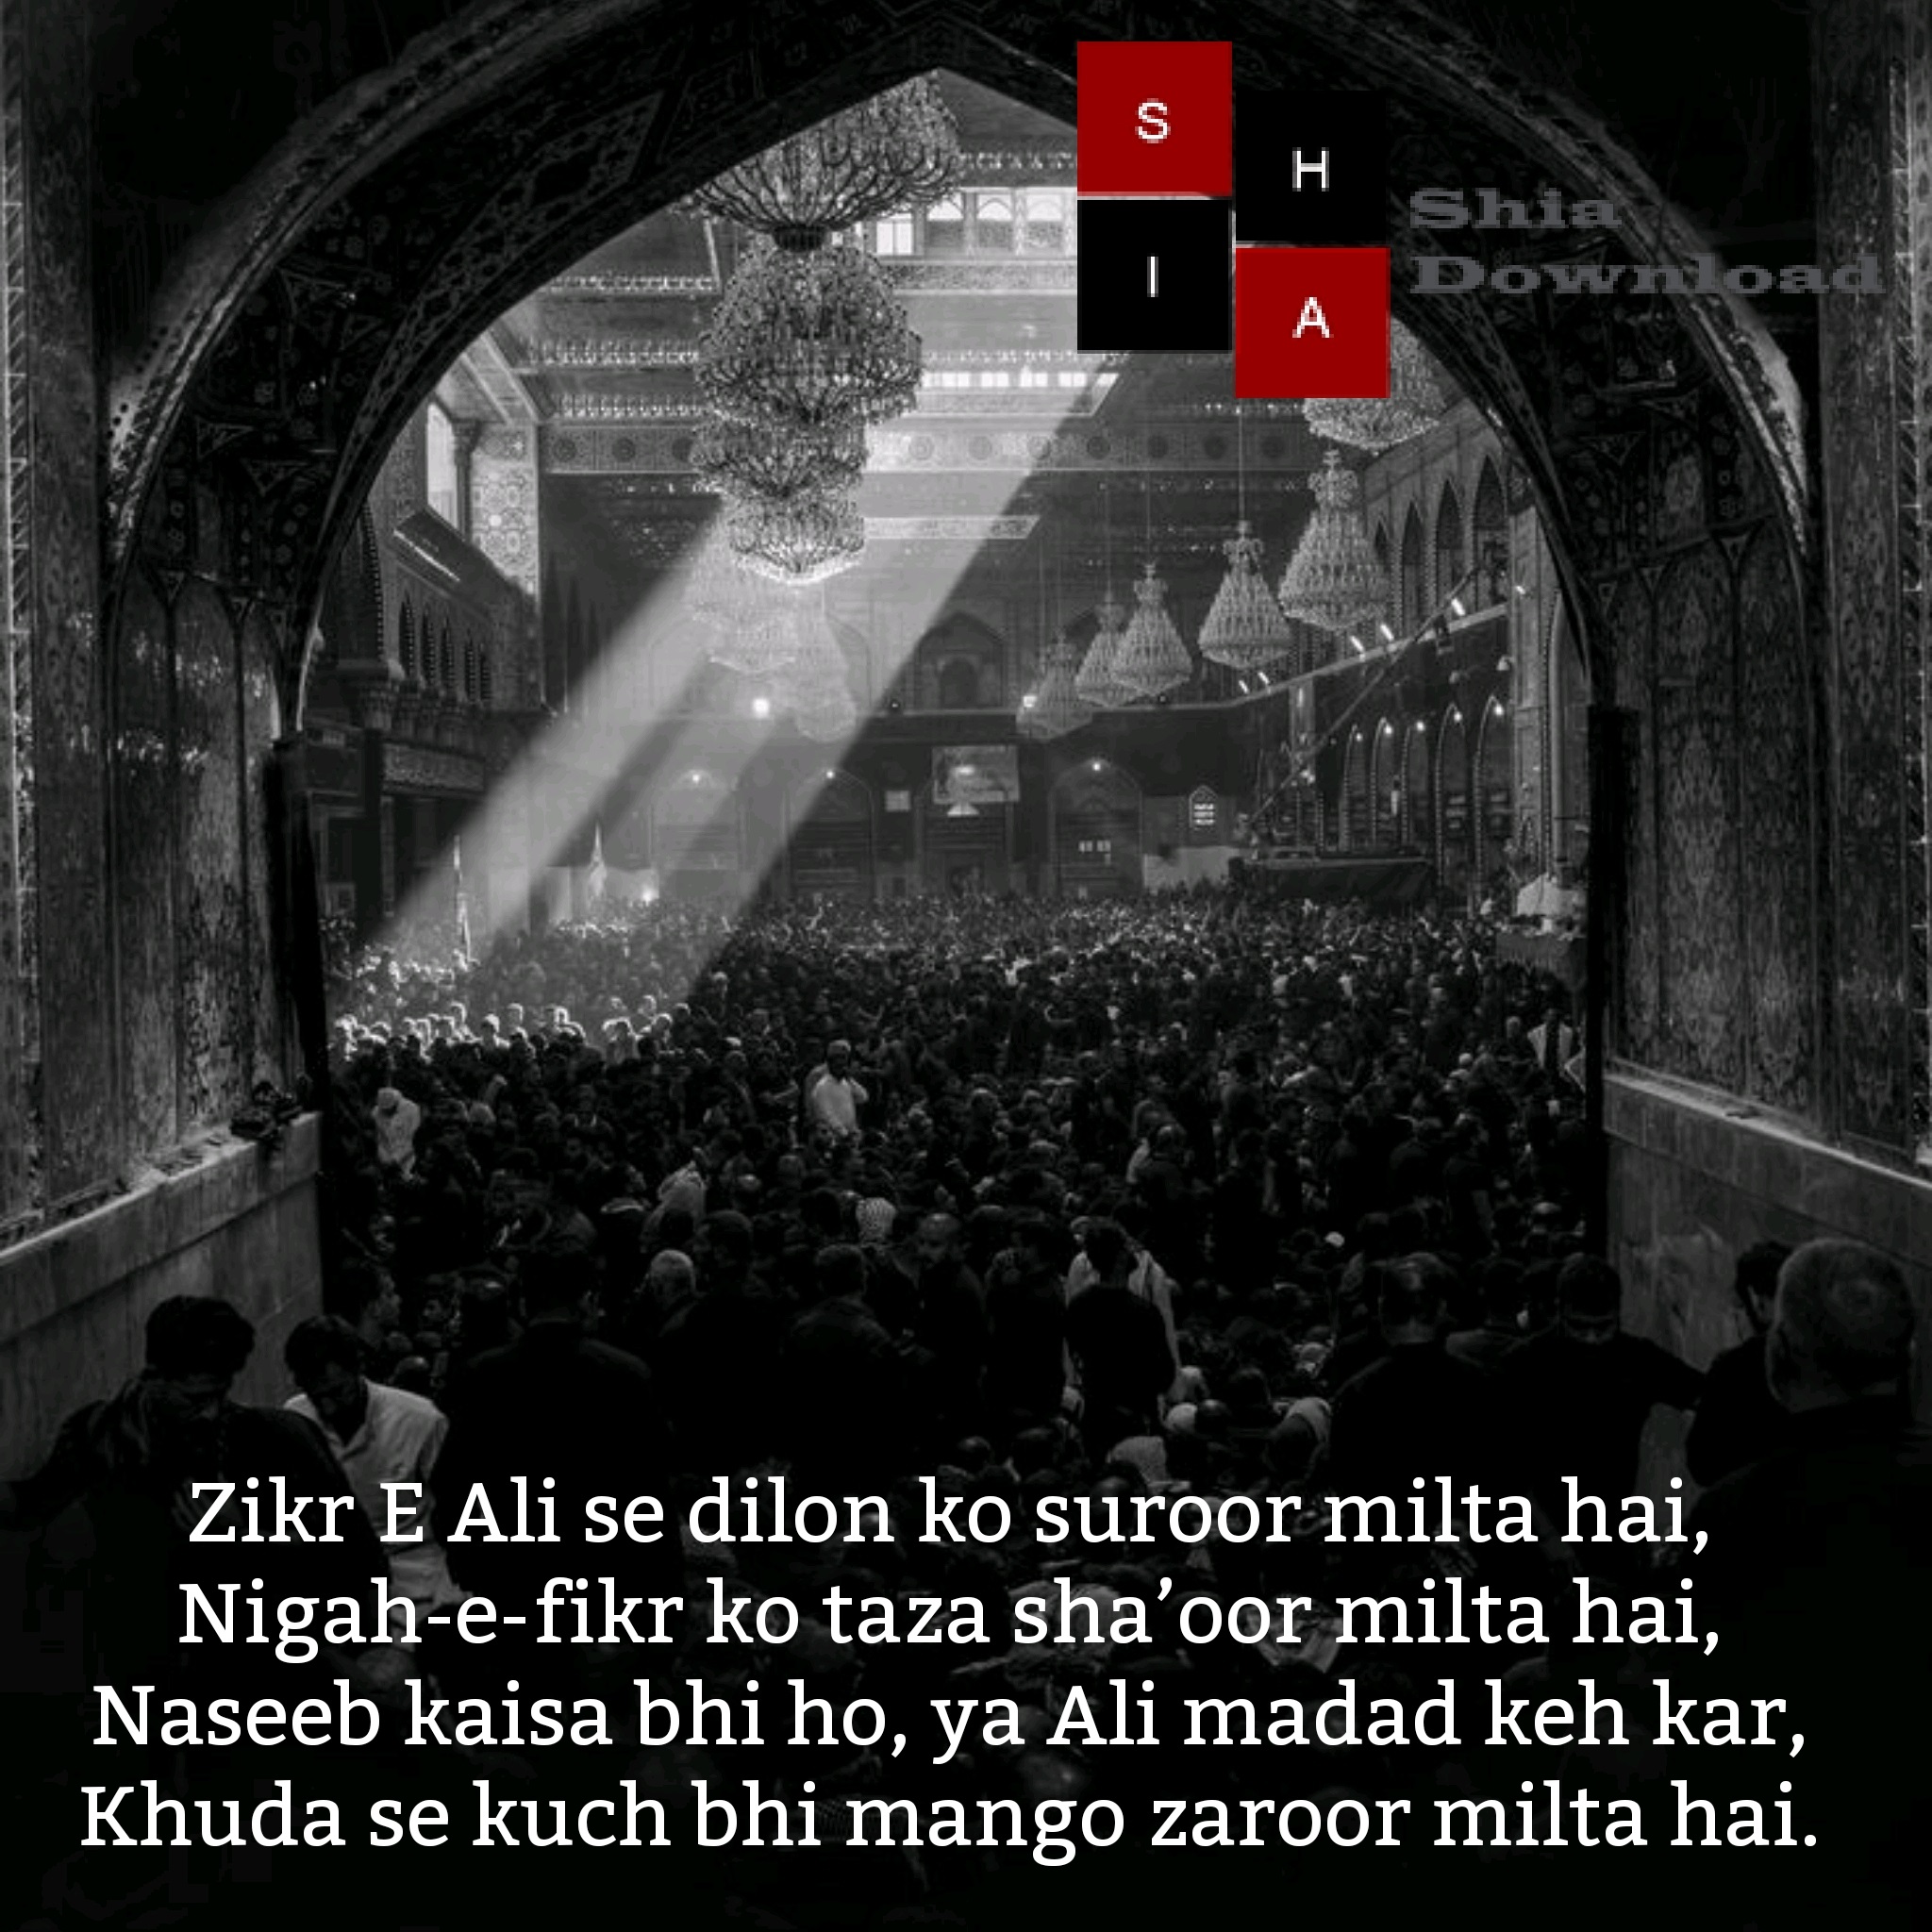 Zikr E Ali se dilon ko suroor milta hai - Imam Ali (a.s) Shayari Shia Download